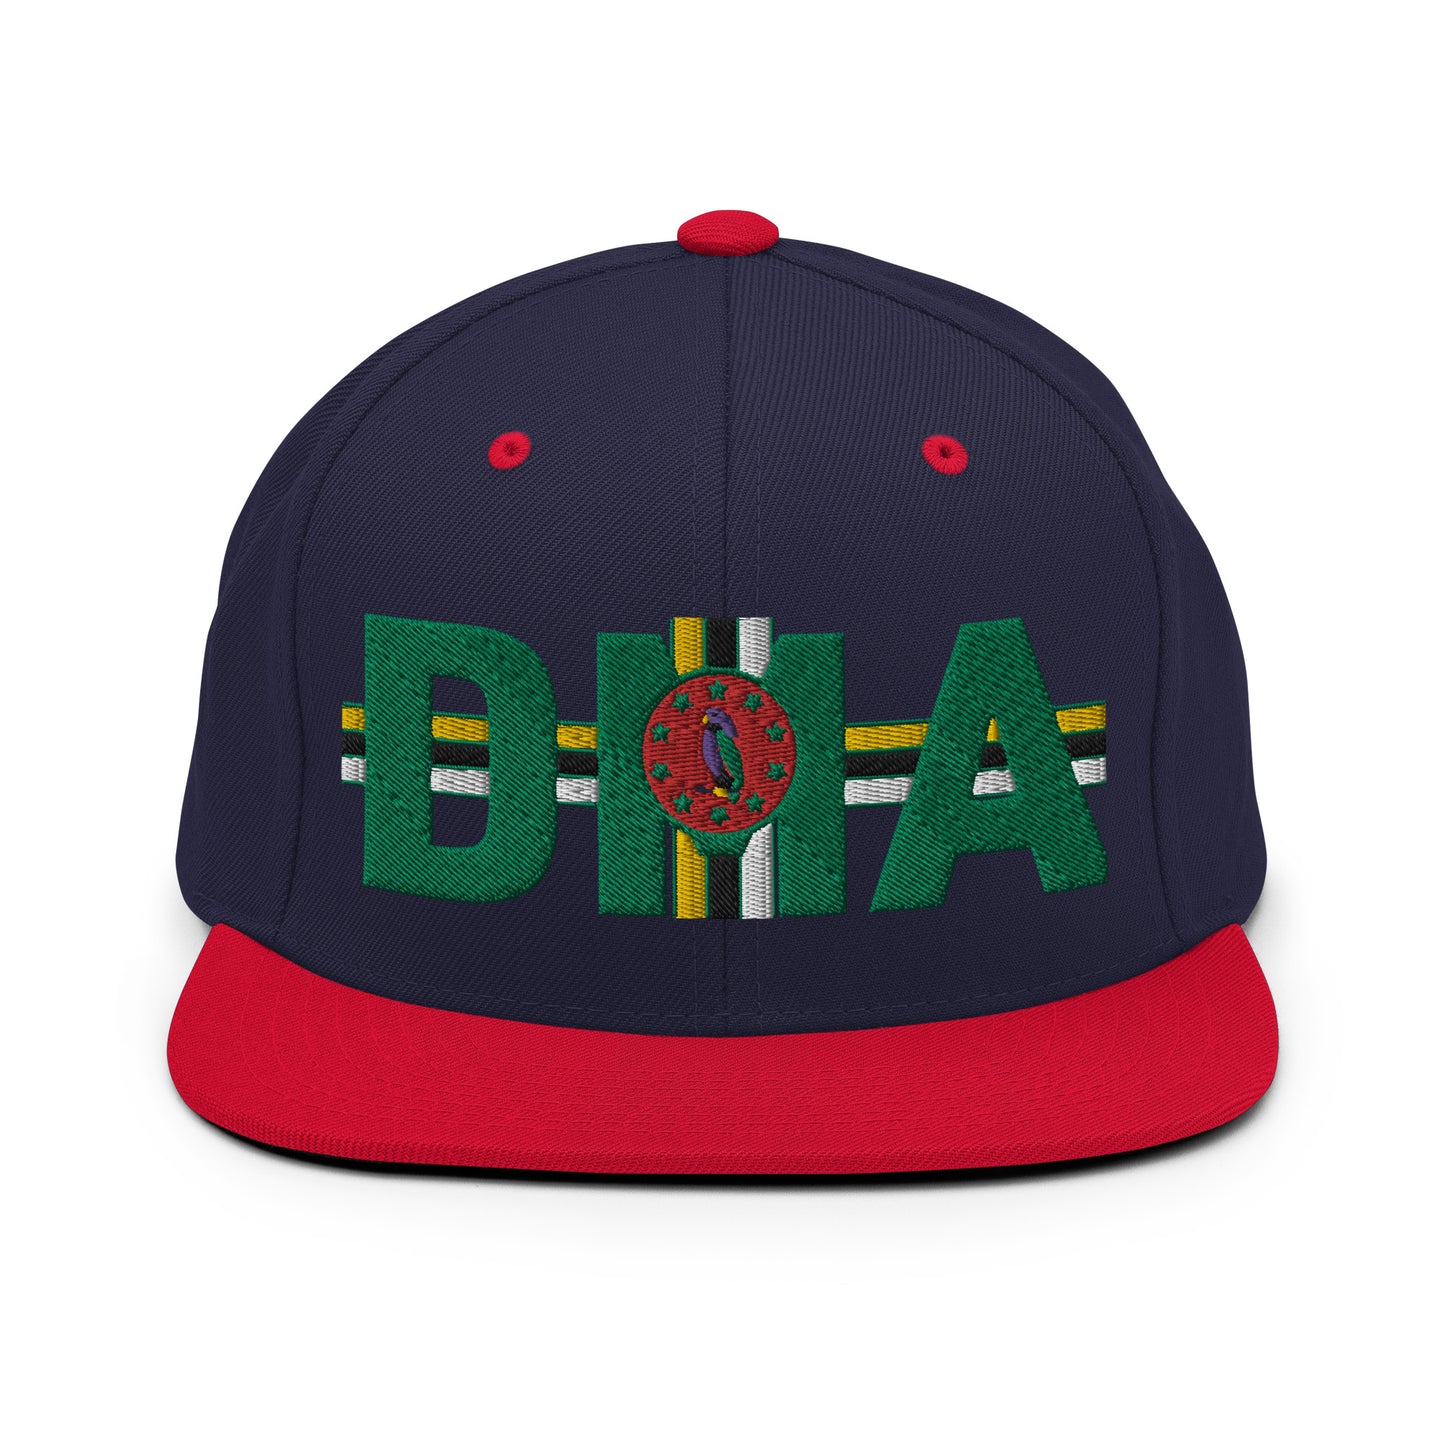 DOMINICA DMA Snapback Hat